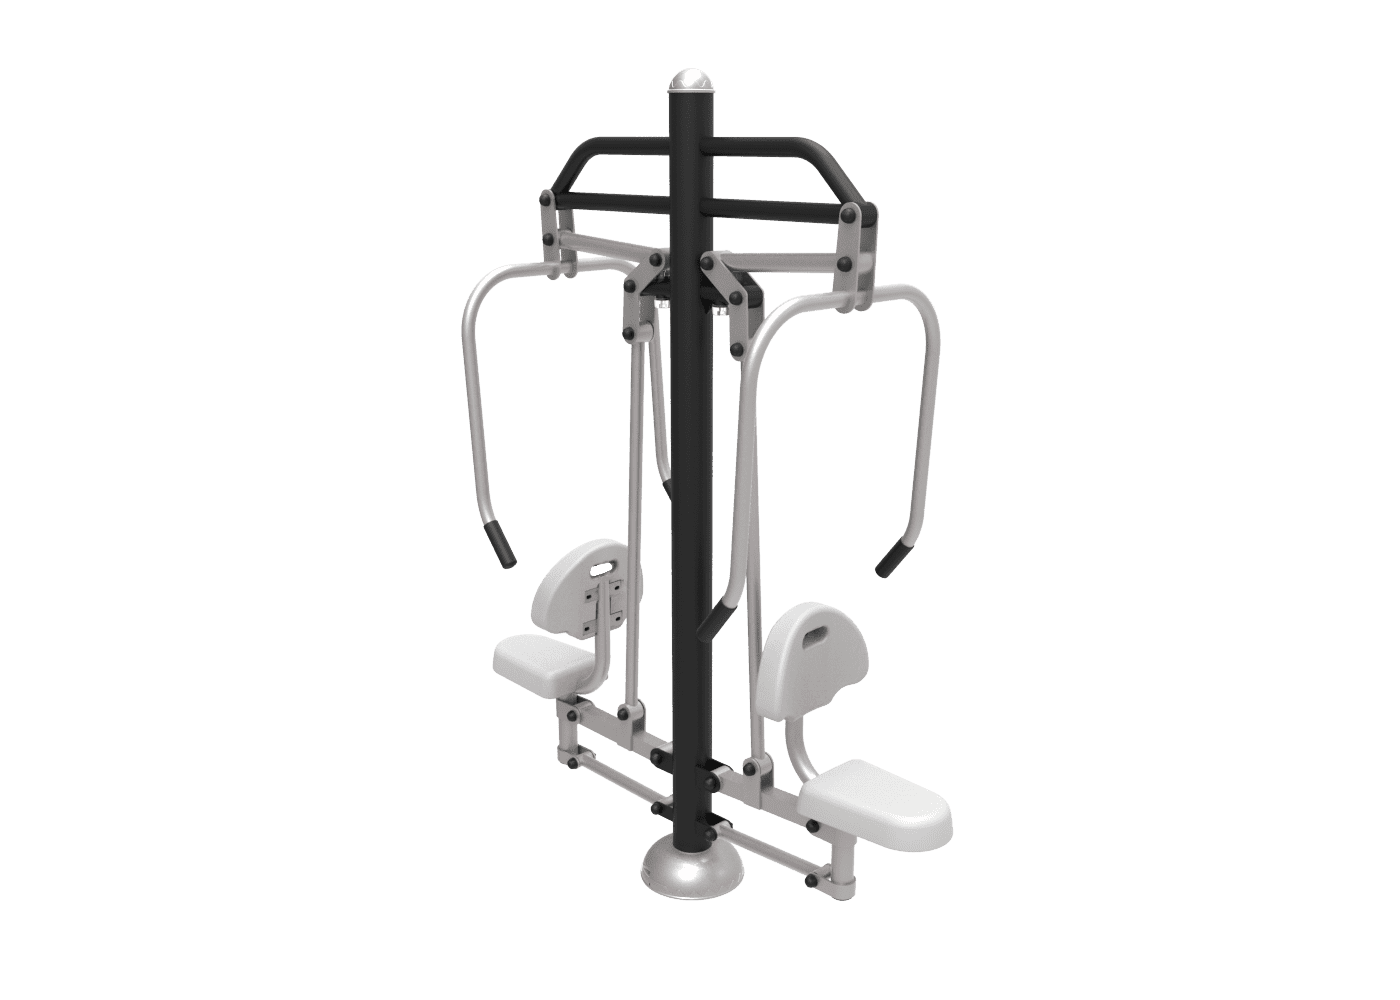 Element chest press jsa003n - appareils de fitness de plein air_0